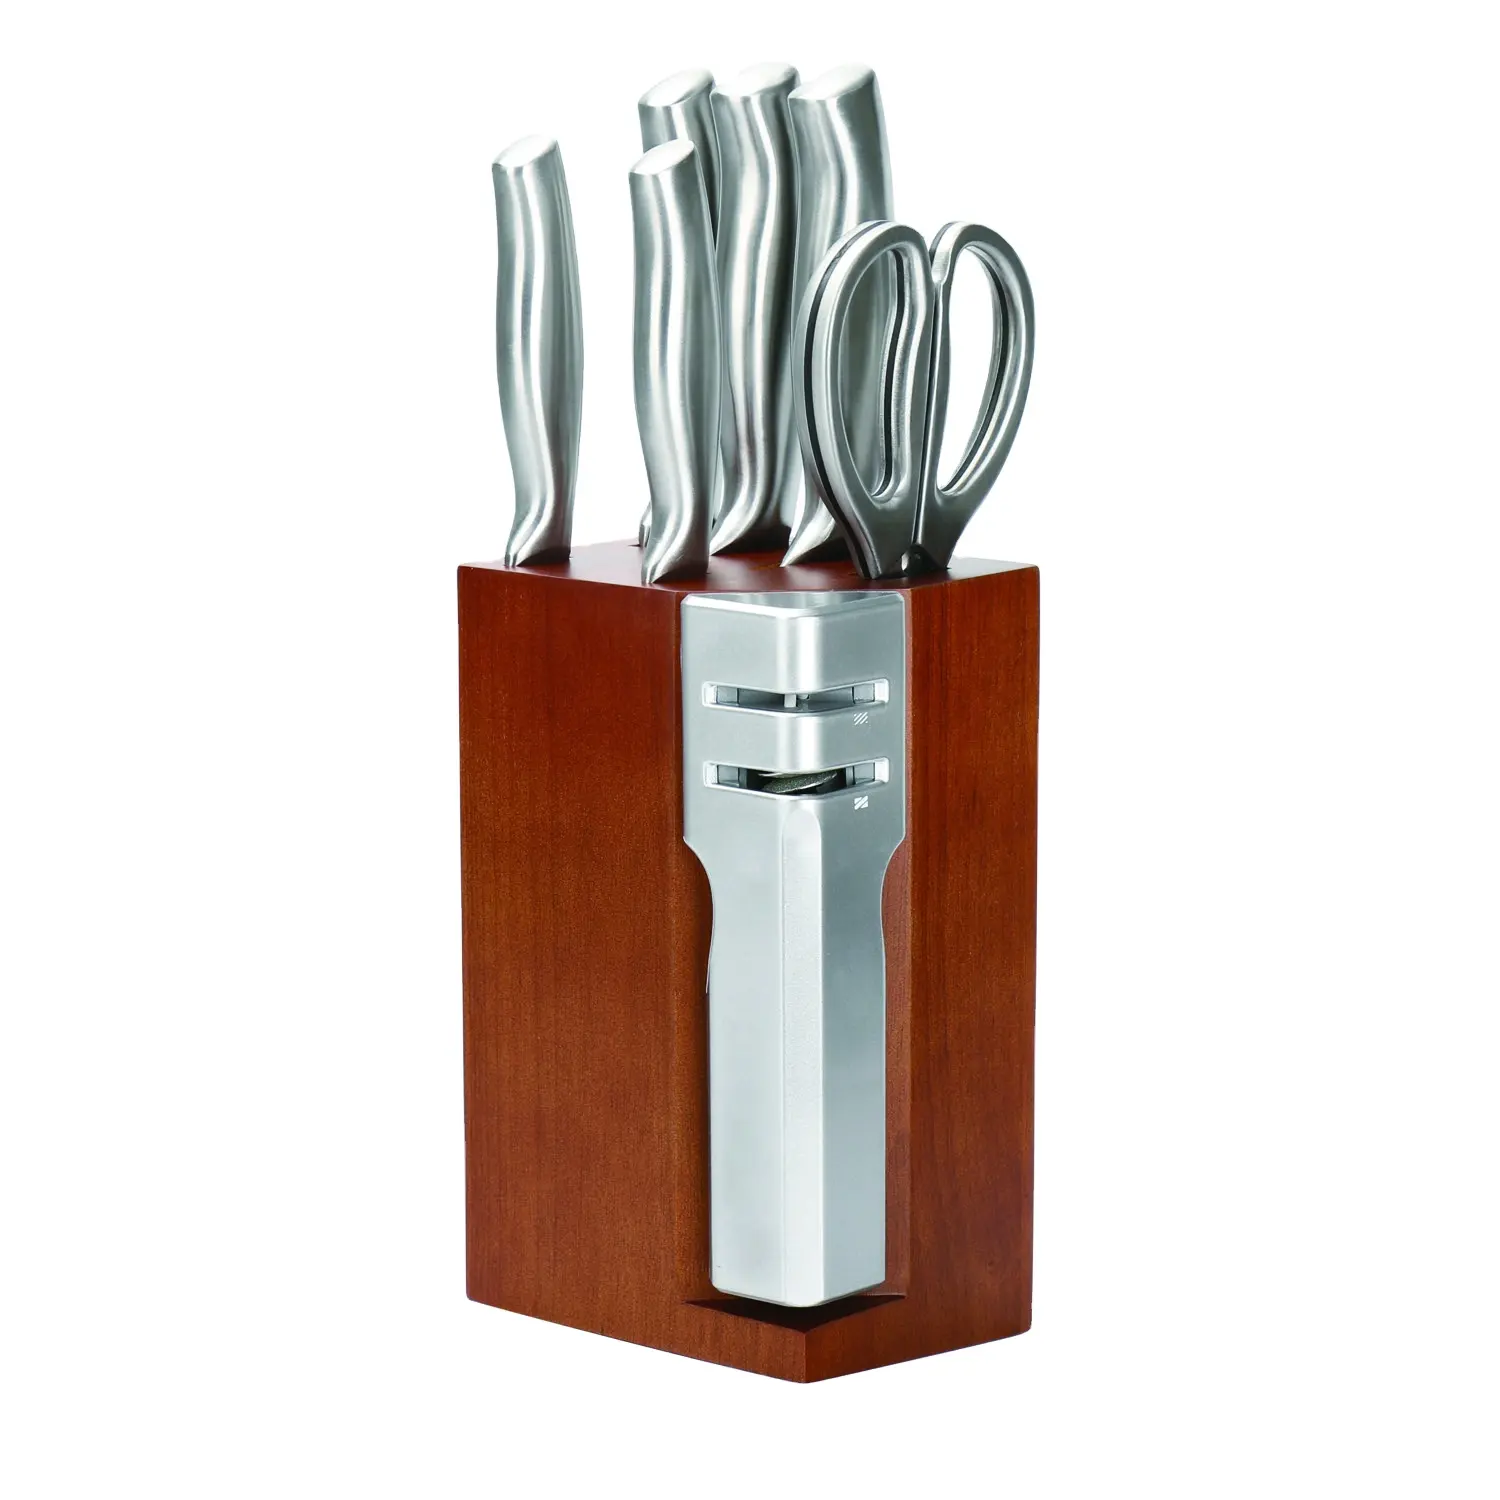 JINYU Set pisau memasak 2 tahap, peralatan makan pisau Stainless Steel dengan rautan 2 tahap yang dapat dilepas dan blok kayu 7 buah